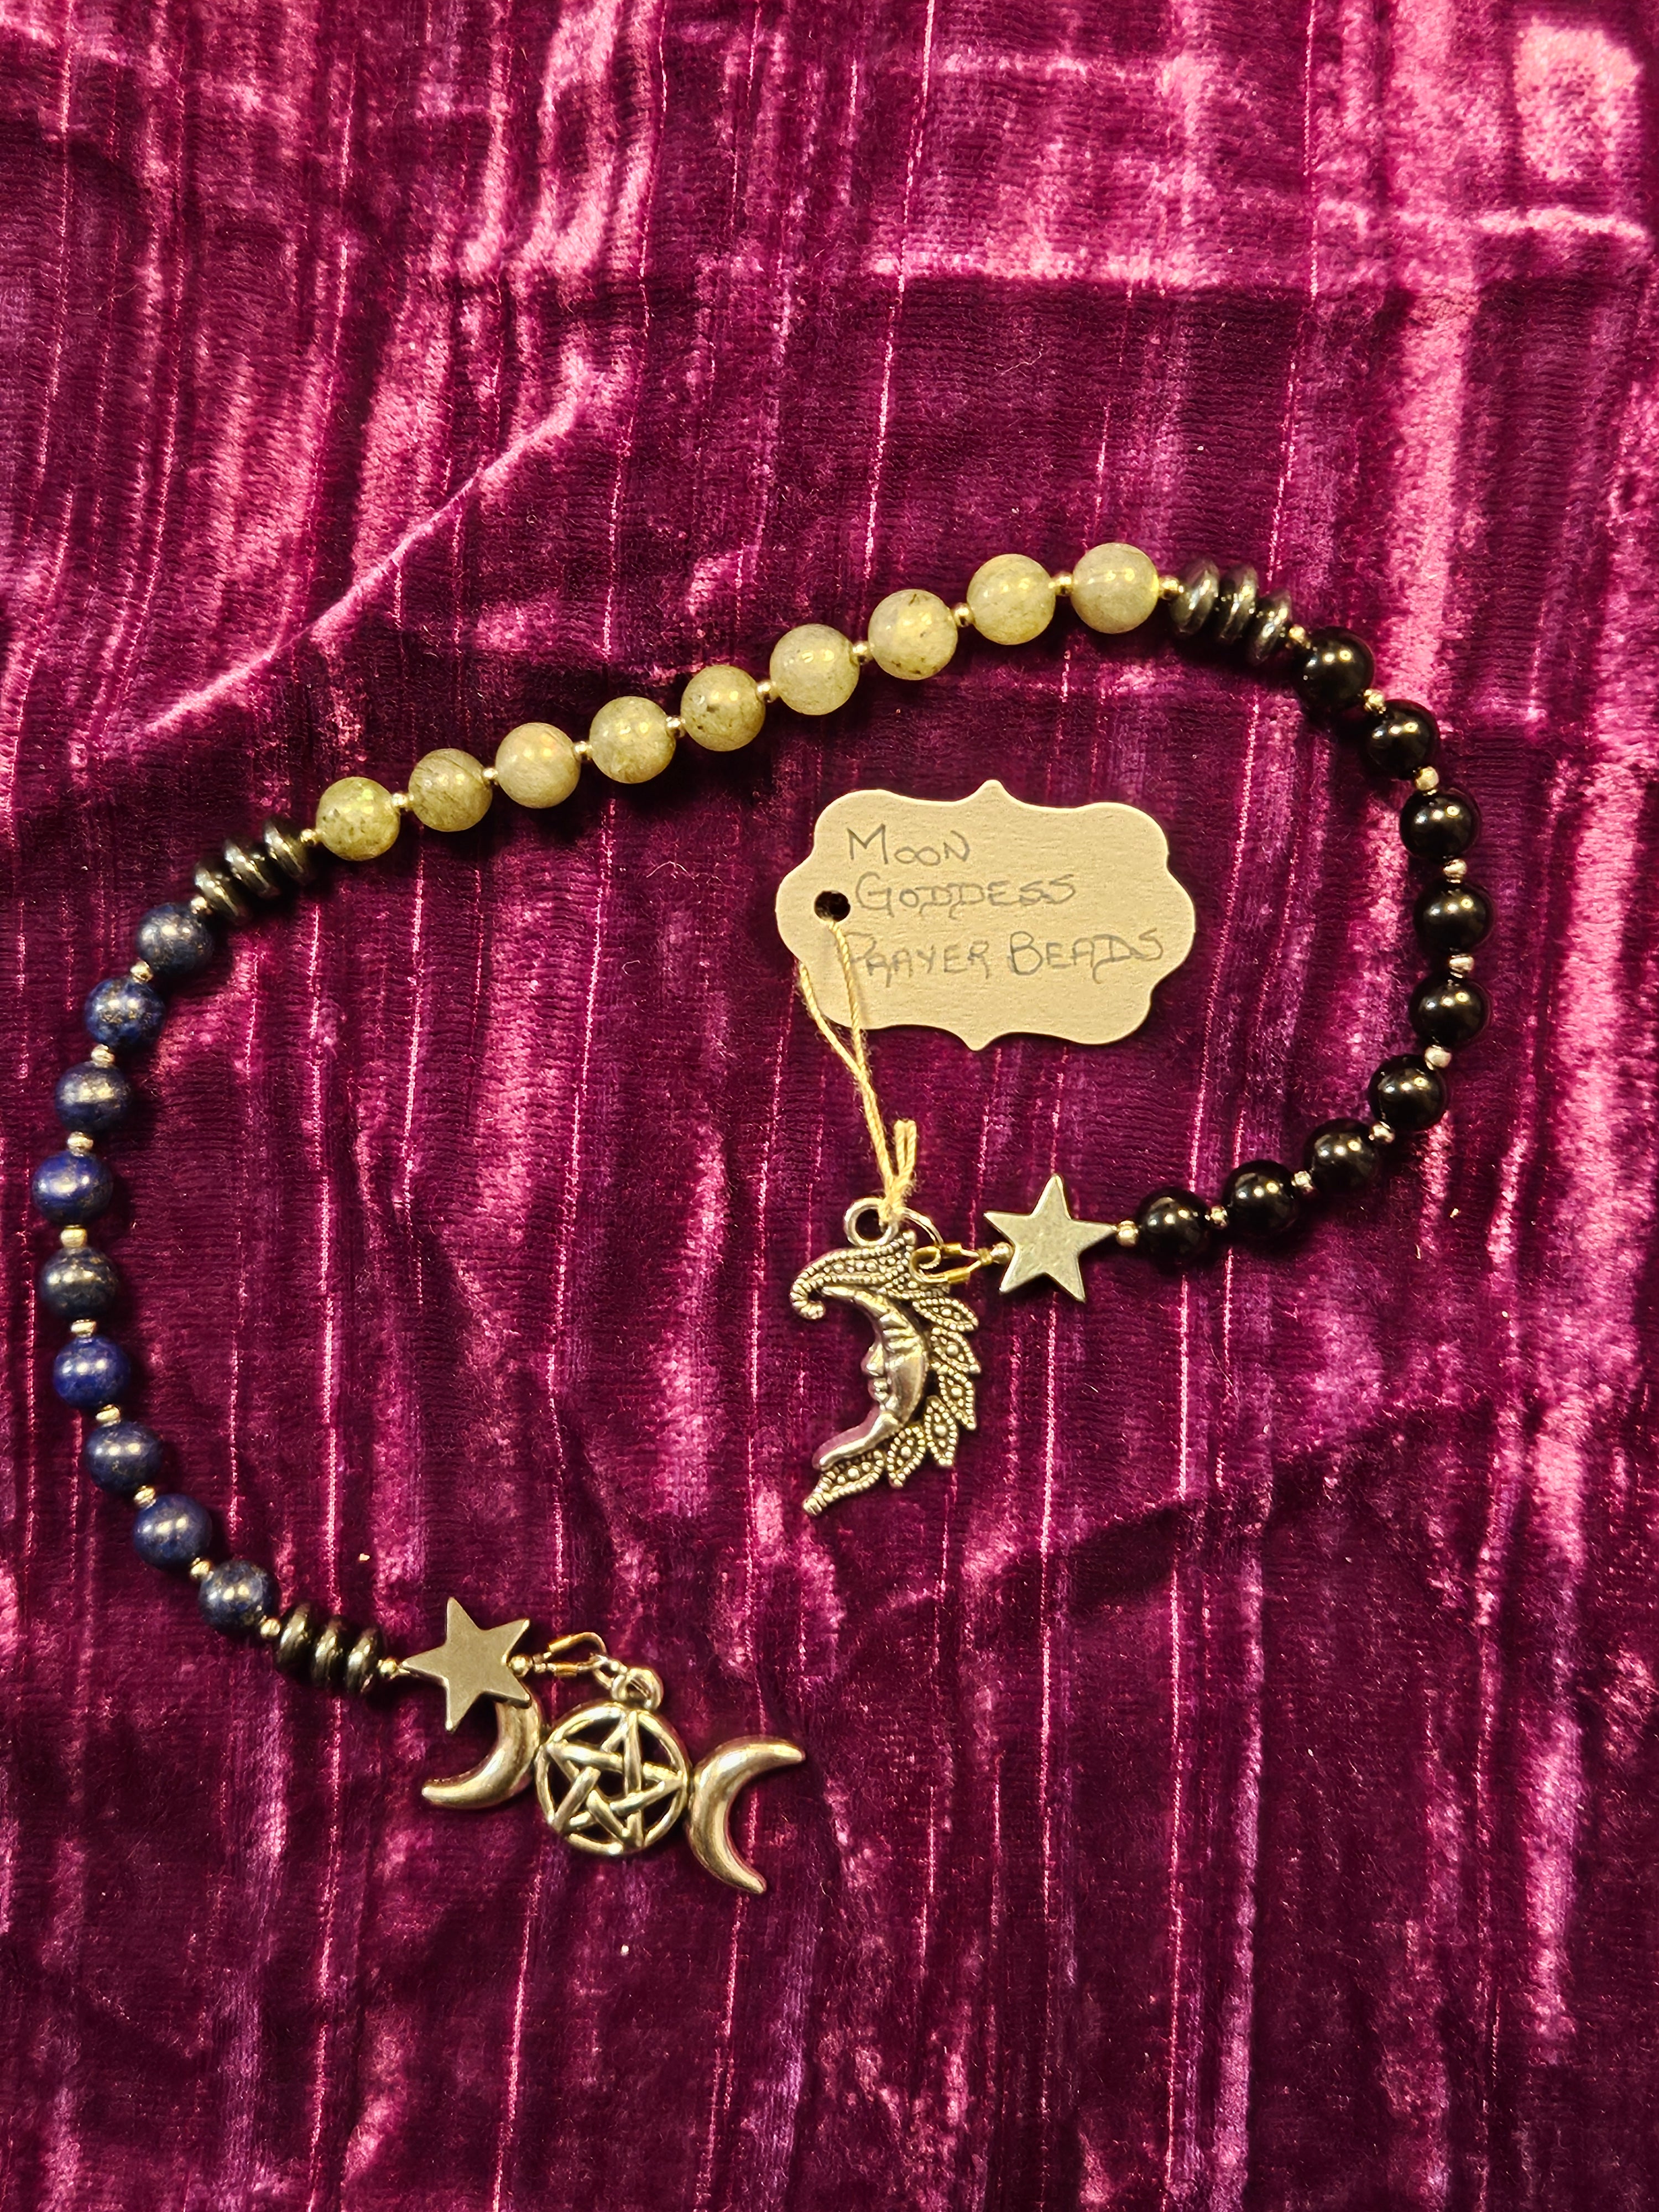 Moon Goddess Prayer Beads